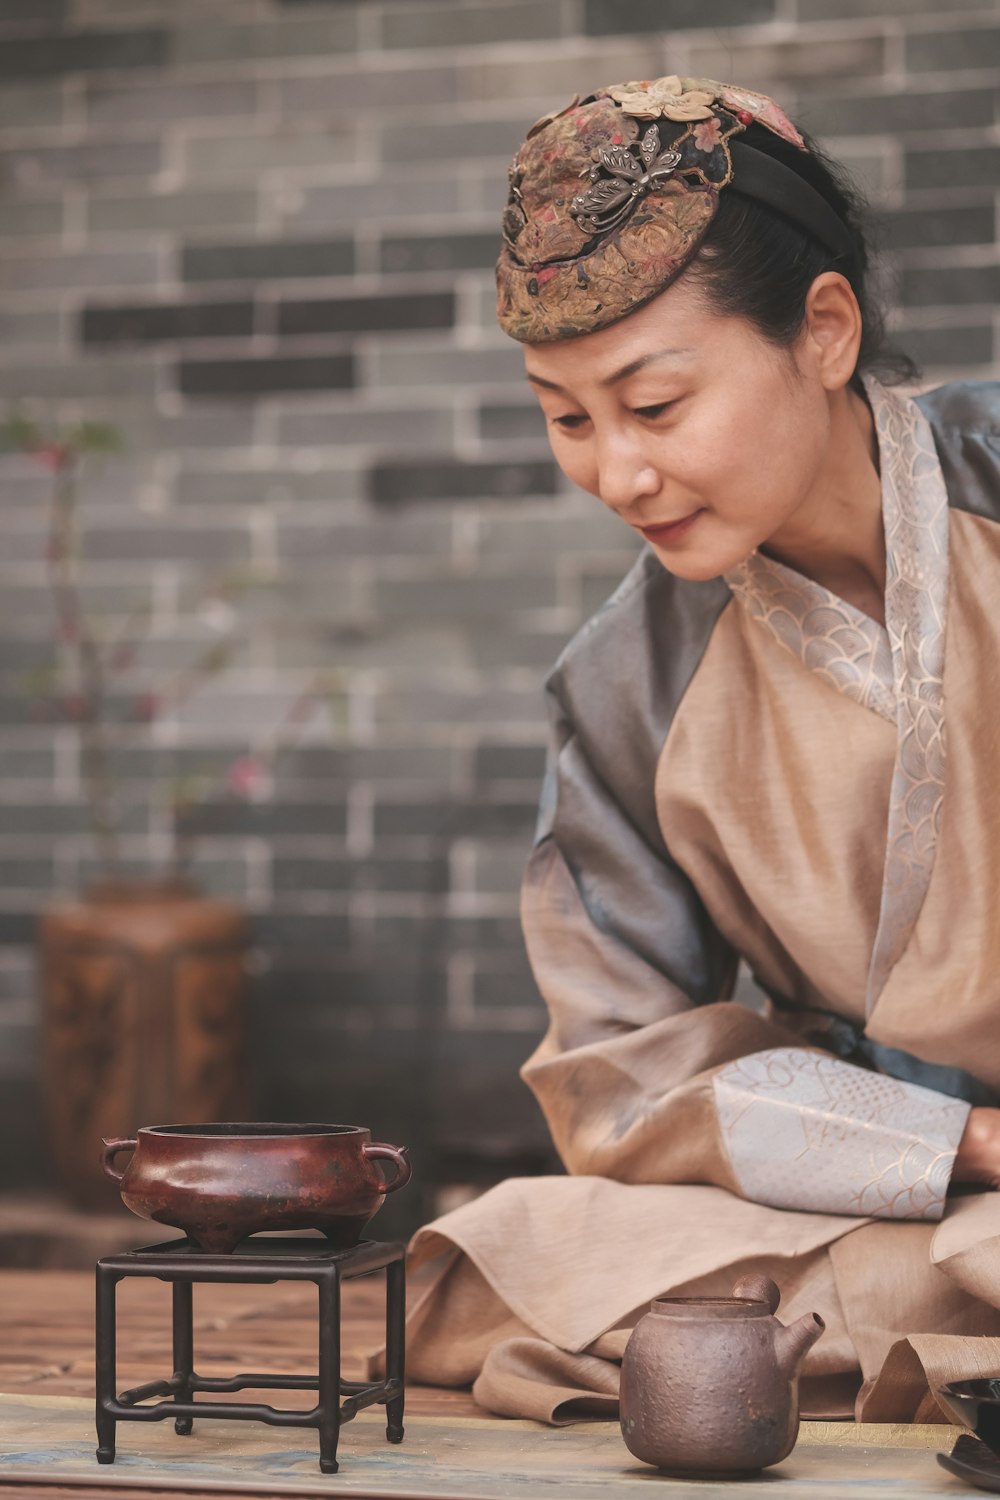 a woman in a kimono is preparing food